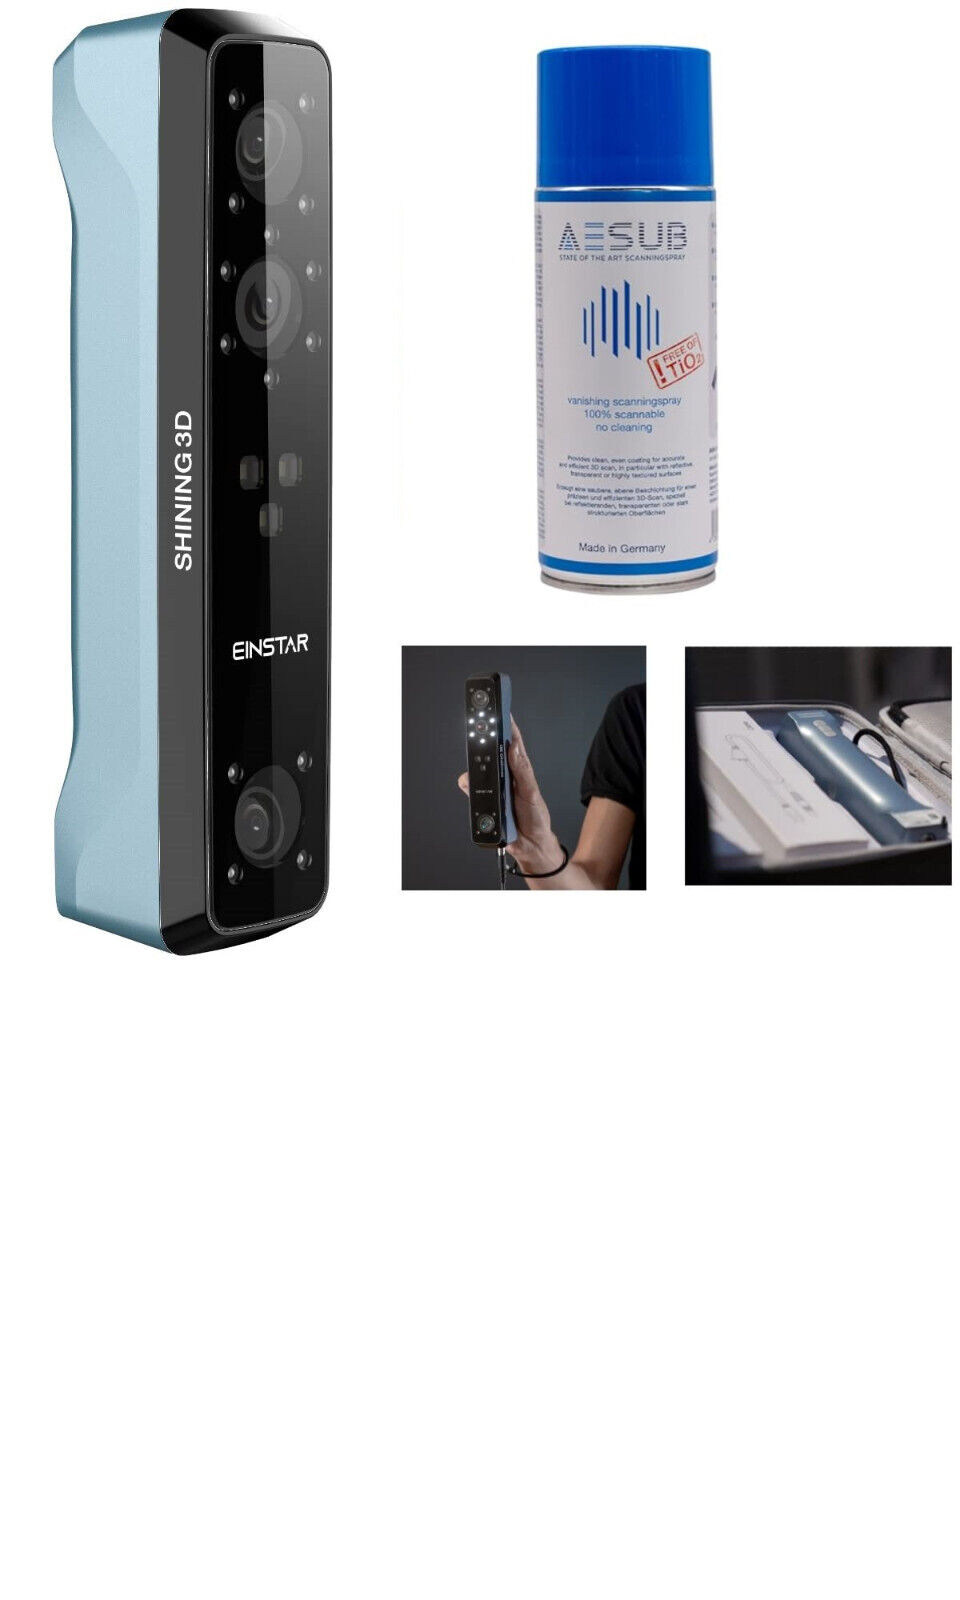 Openbox - Einstar Handheld Color 3D Scanner and AESUB Blue Scanning Spray